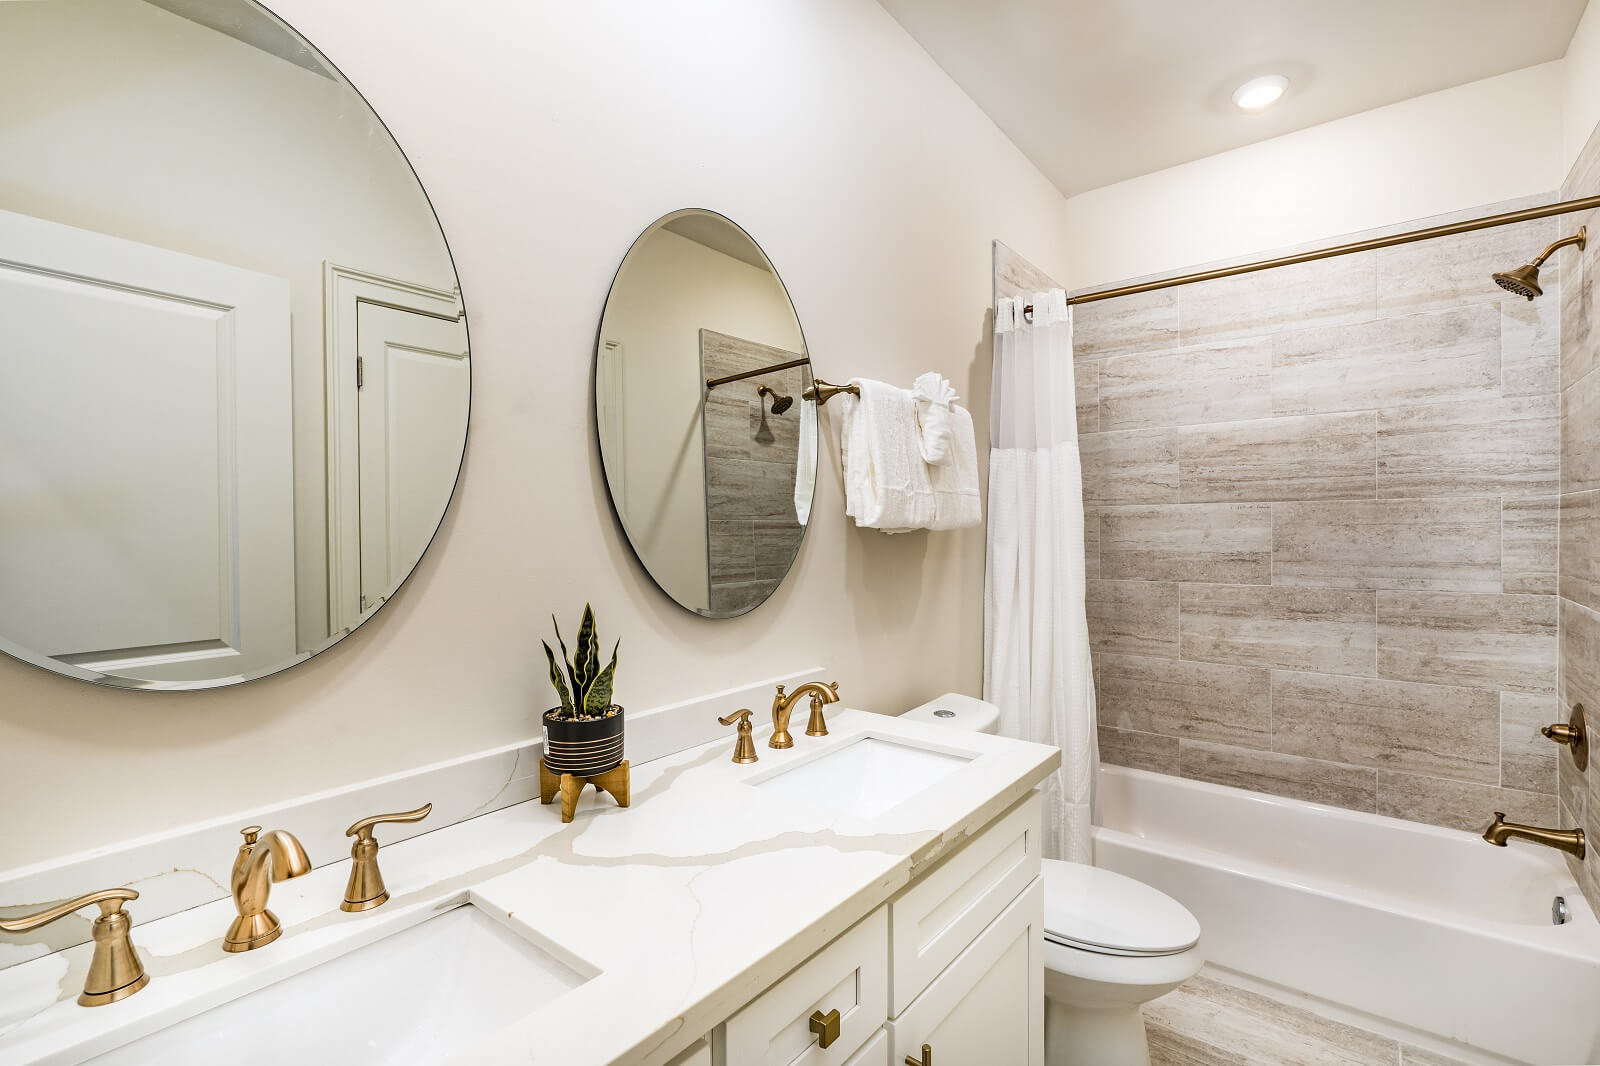 The Alexandre Unit 204 bathroom, a New Orleans luxury rental.